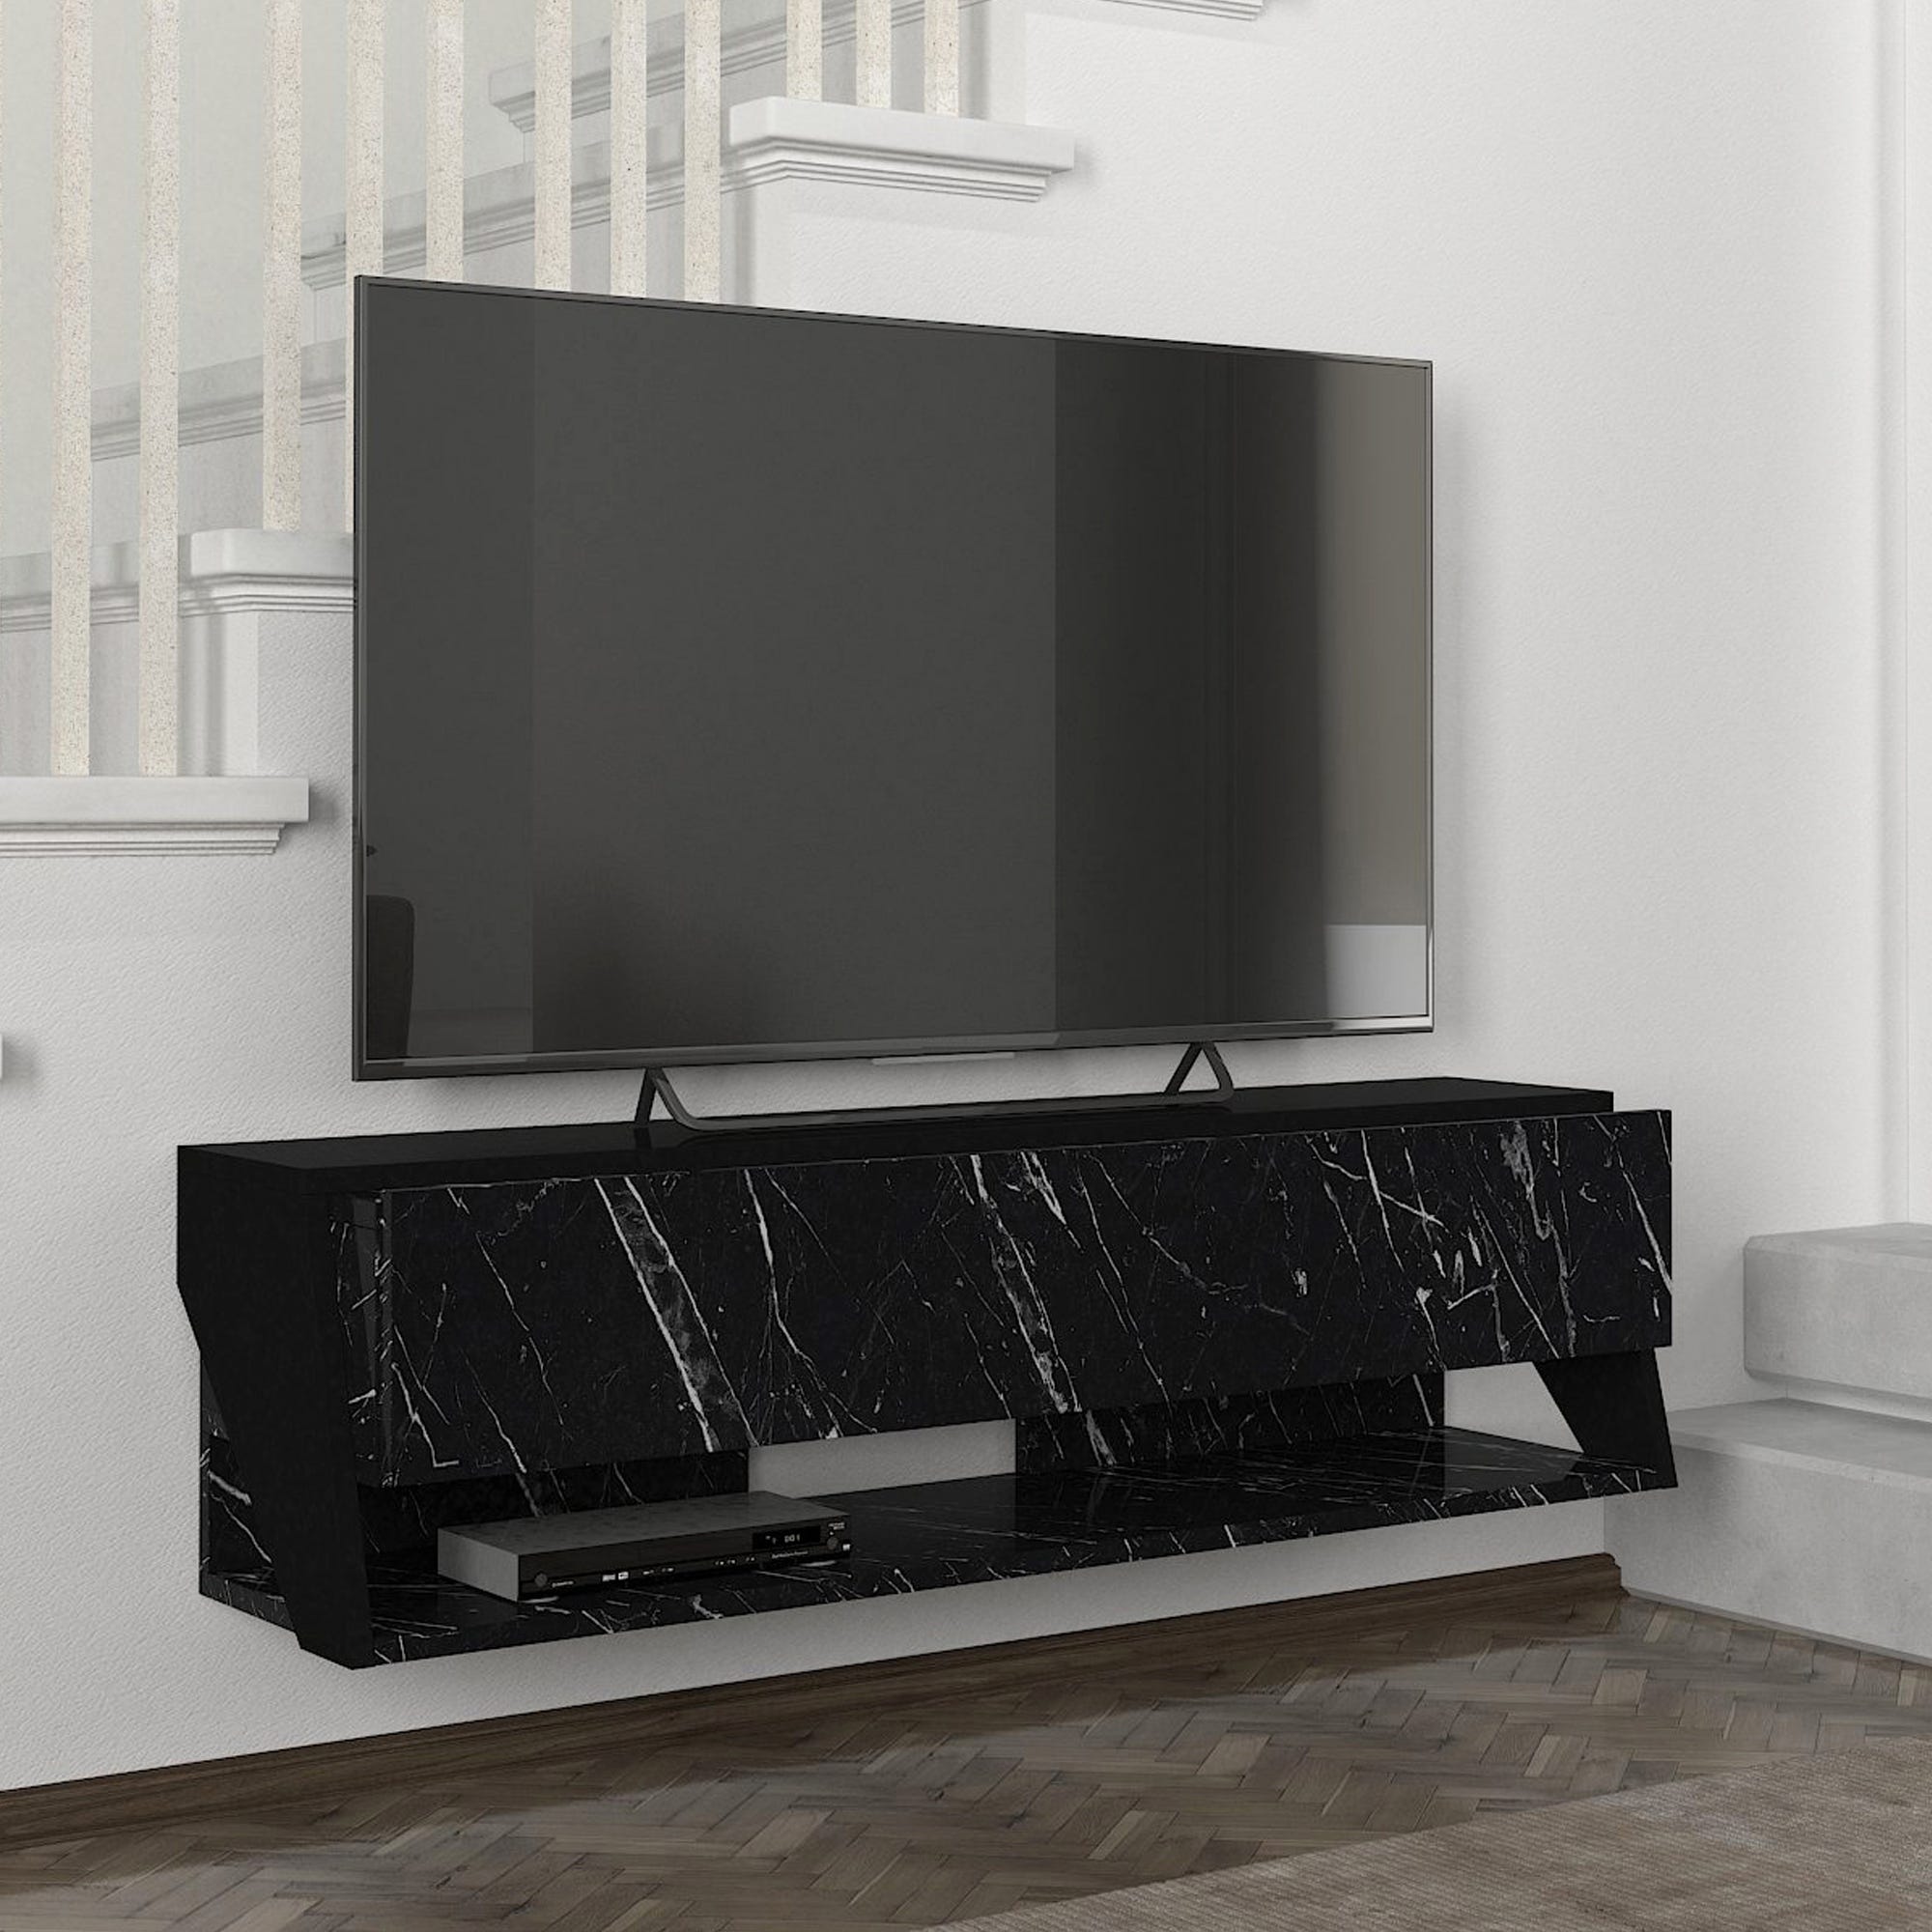 Mueble TV suspendido Lapinlahti Aglomerado 140x32x30 cm roble